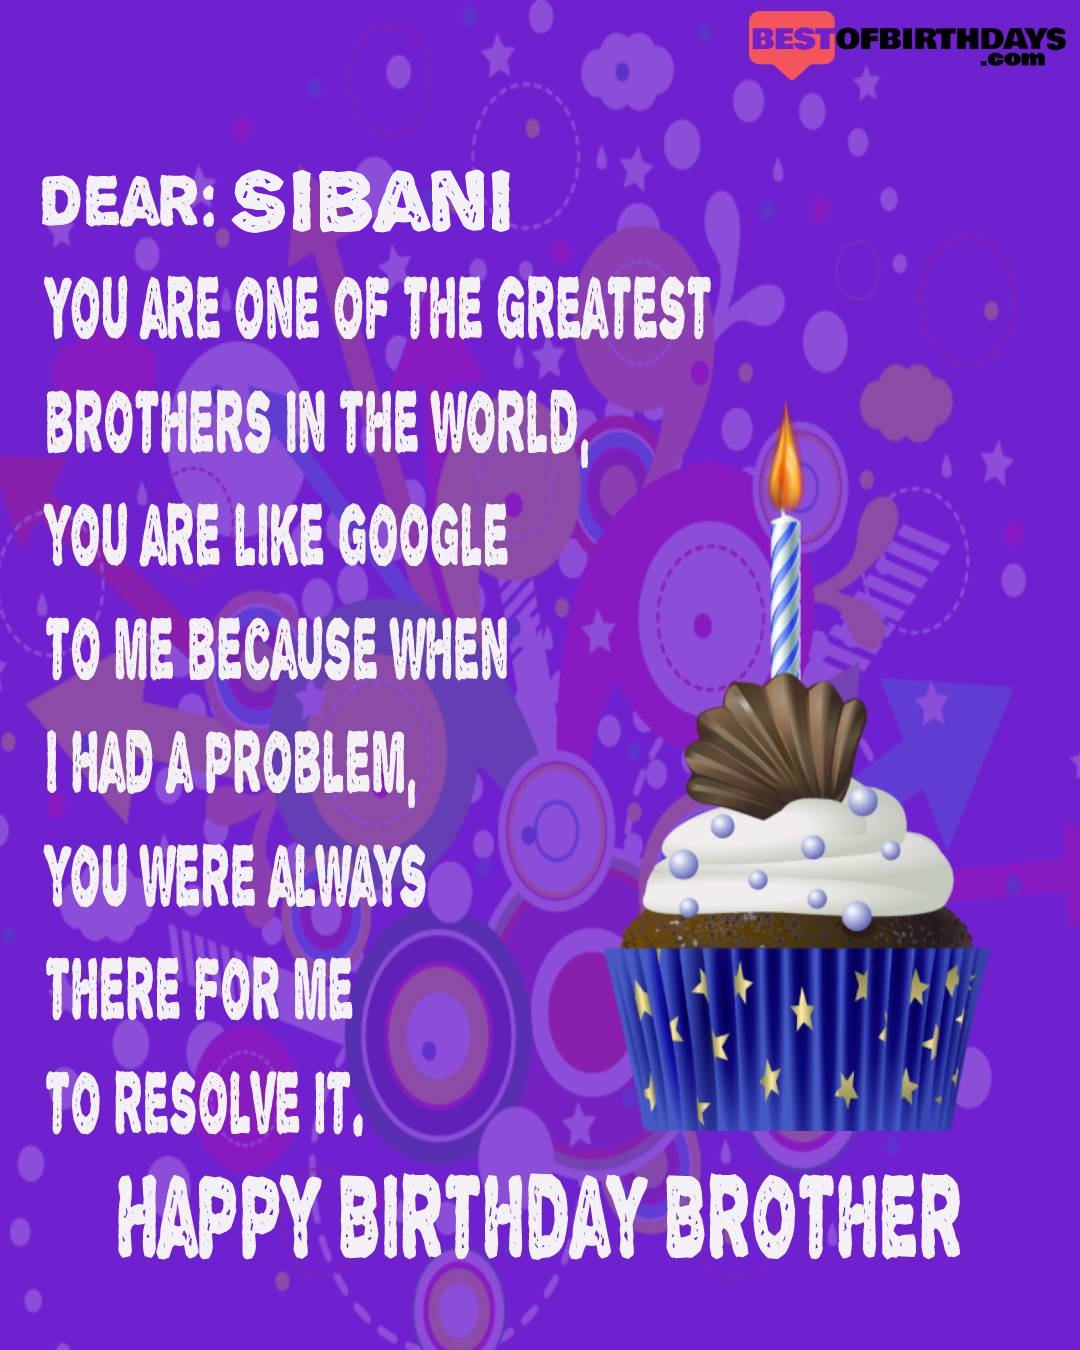 Happy birthday sibani bhai brother bro